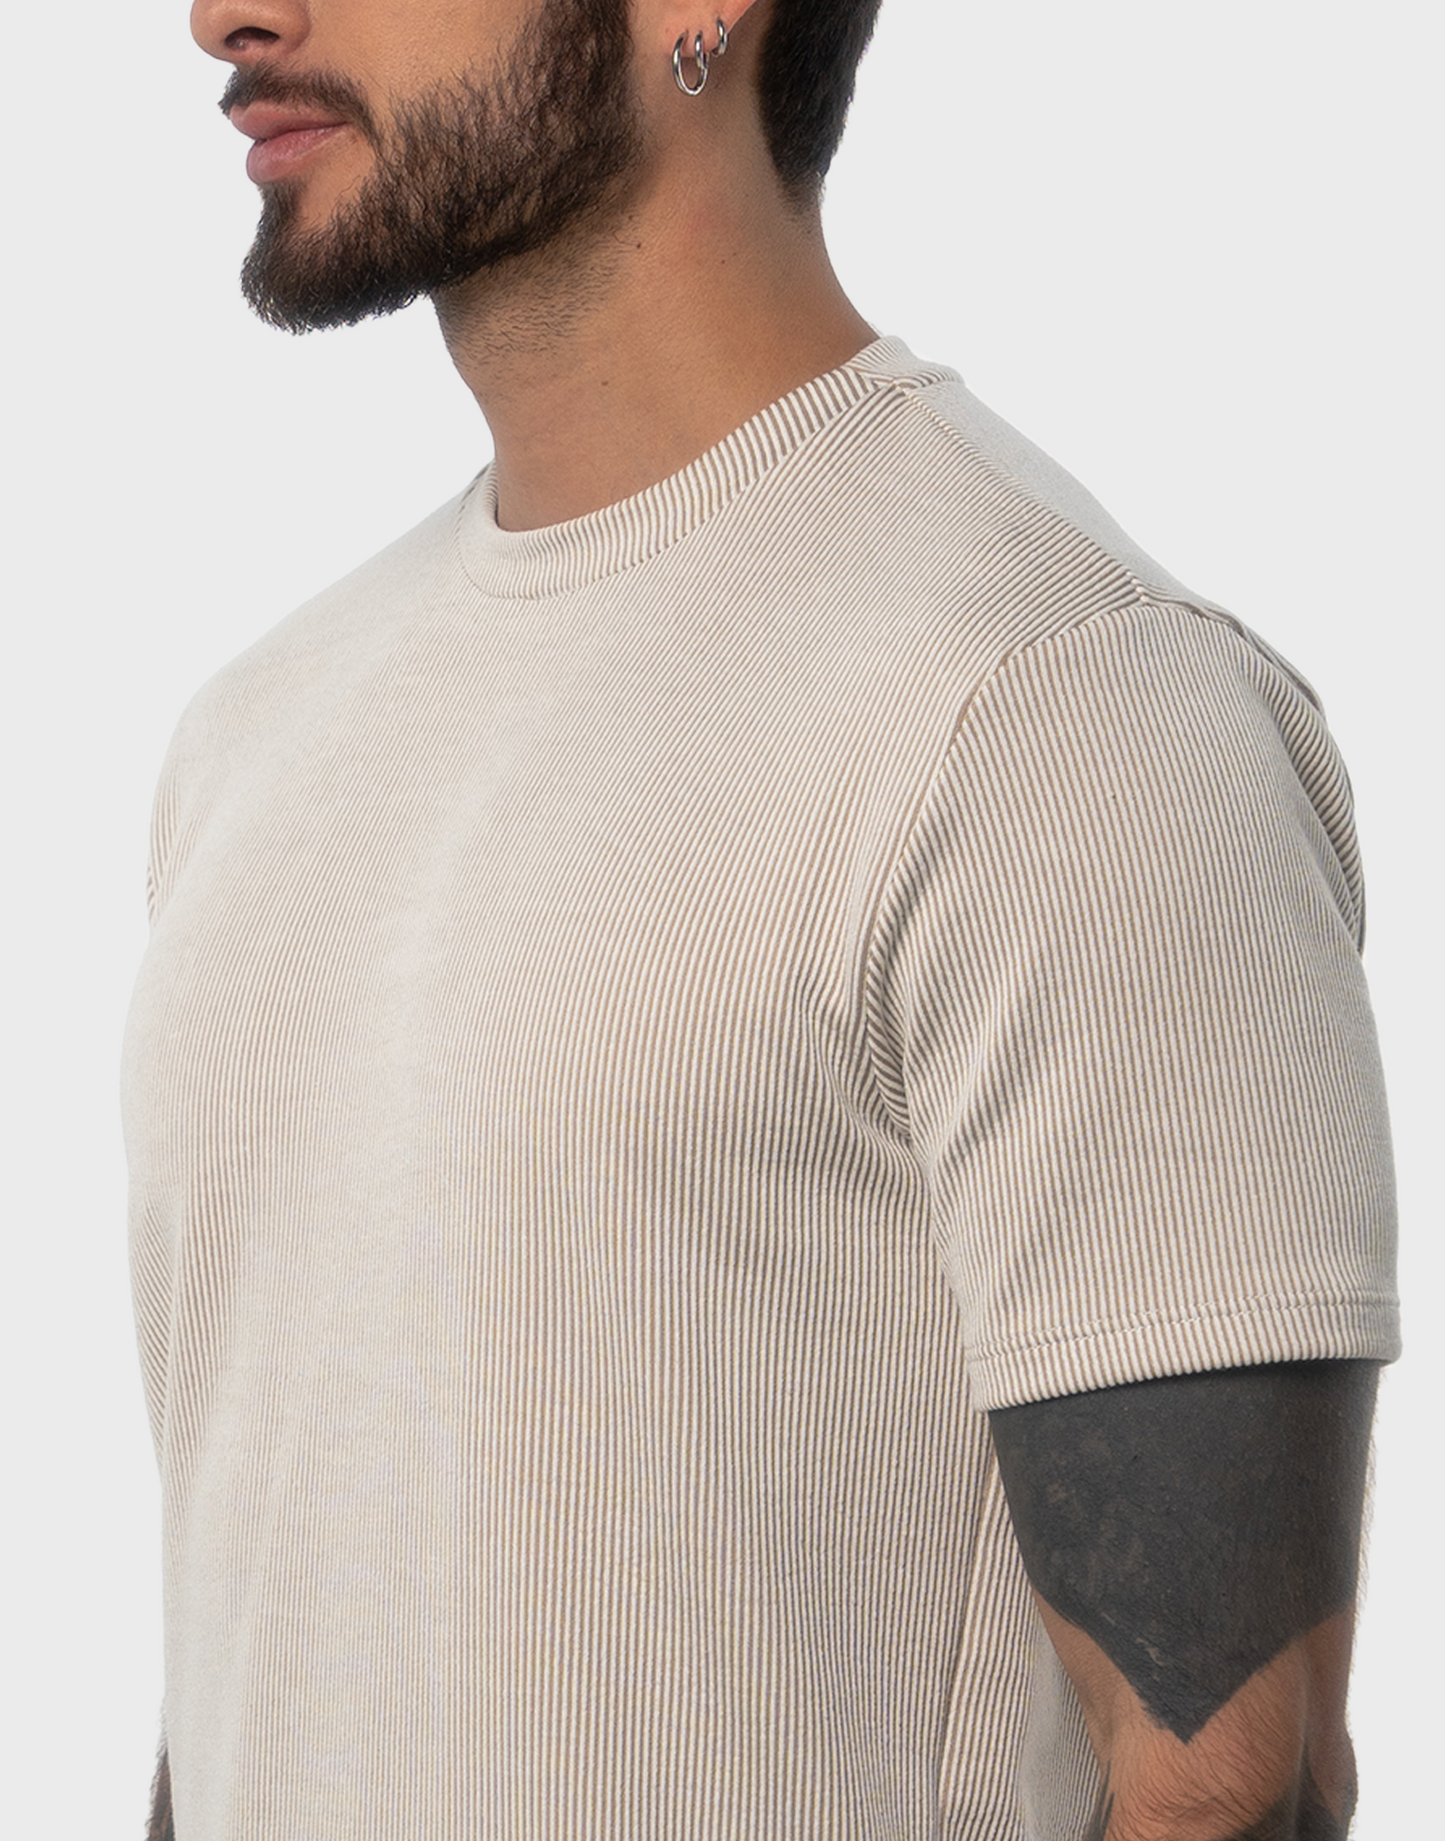 Camiseta Hombre  textura acanalada - N/C